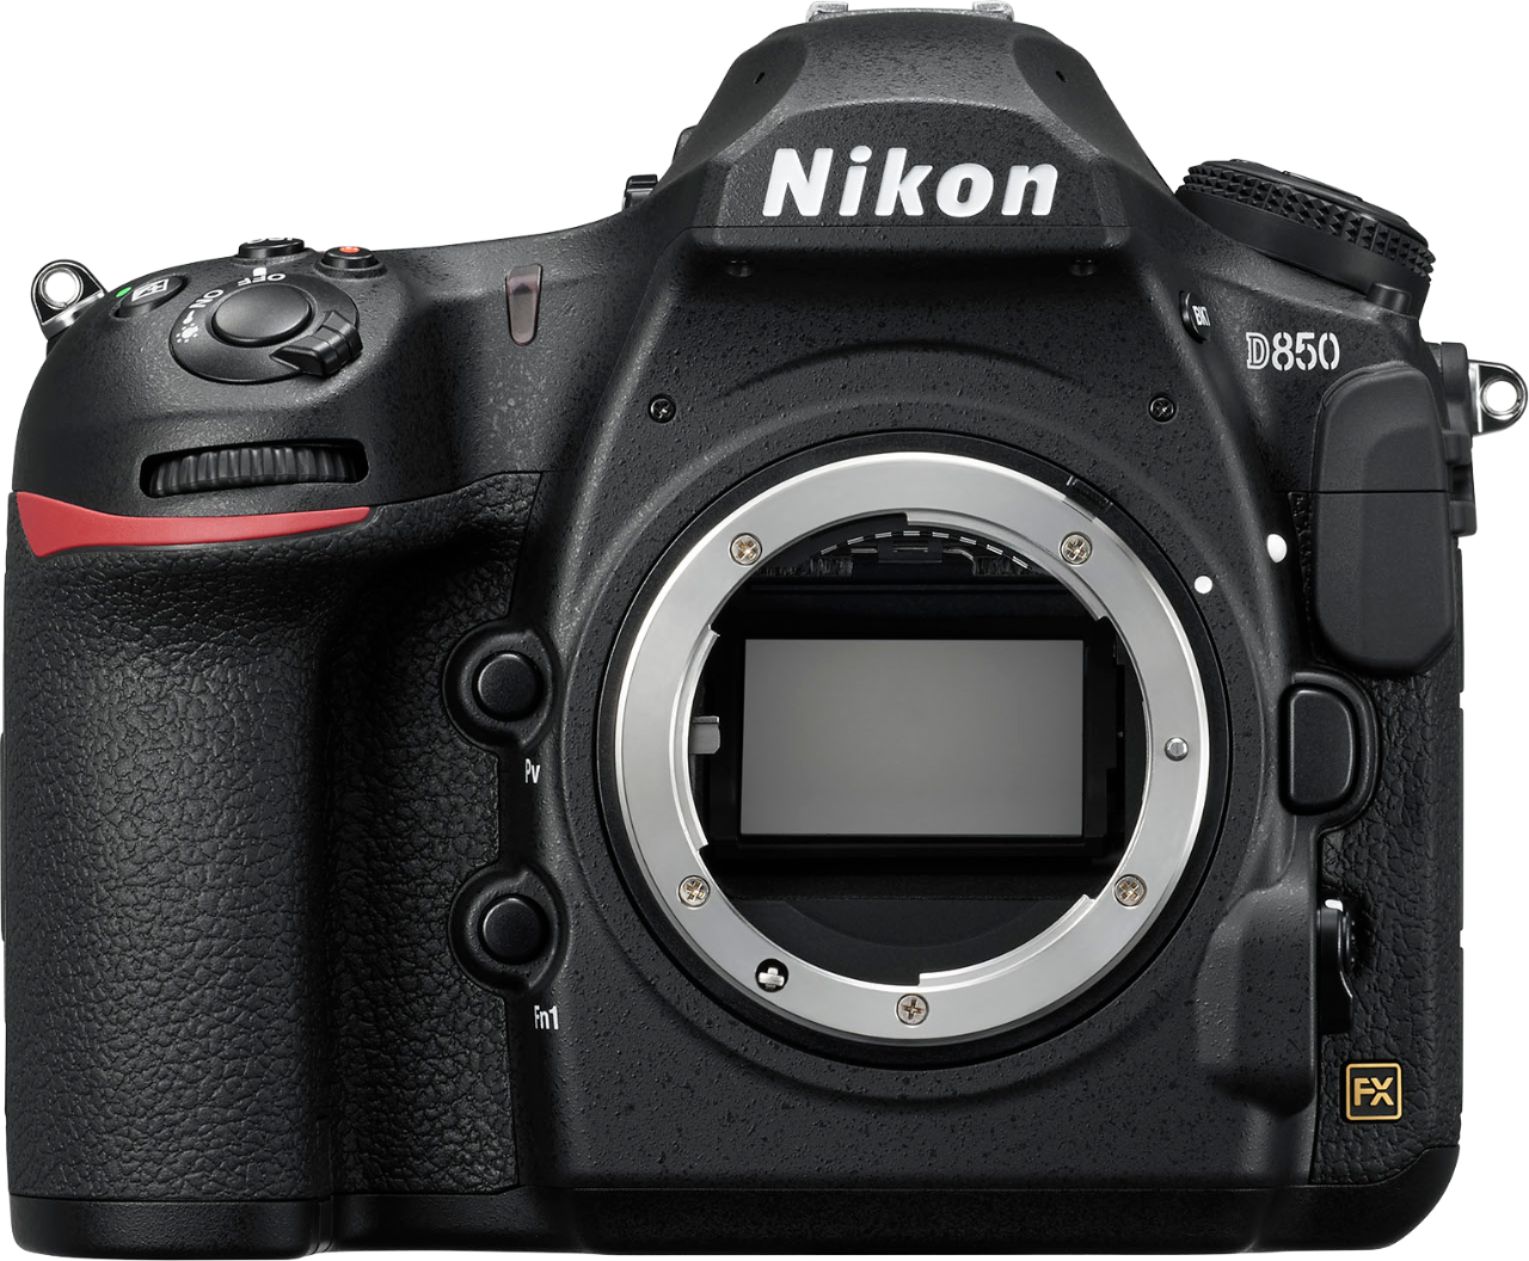 Nikon D850 DSLR Video Camera Black 1585 Best Buy